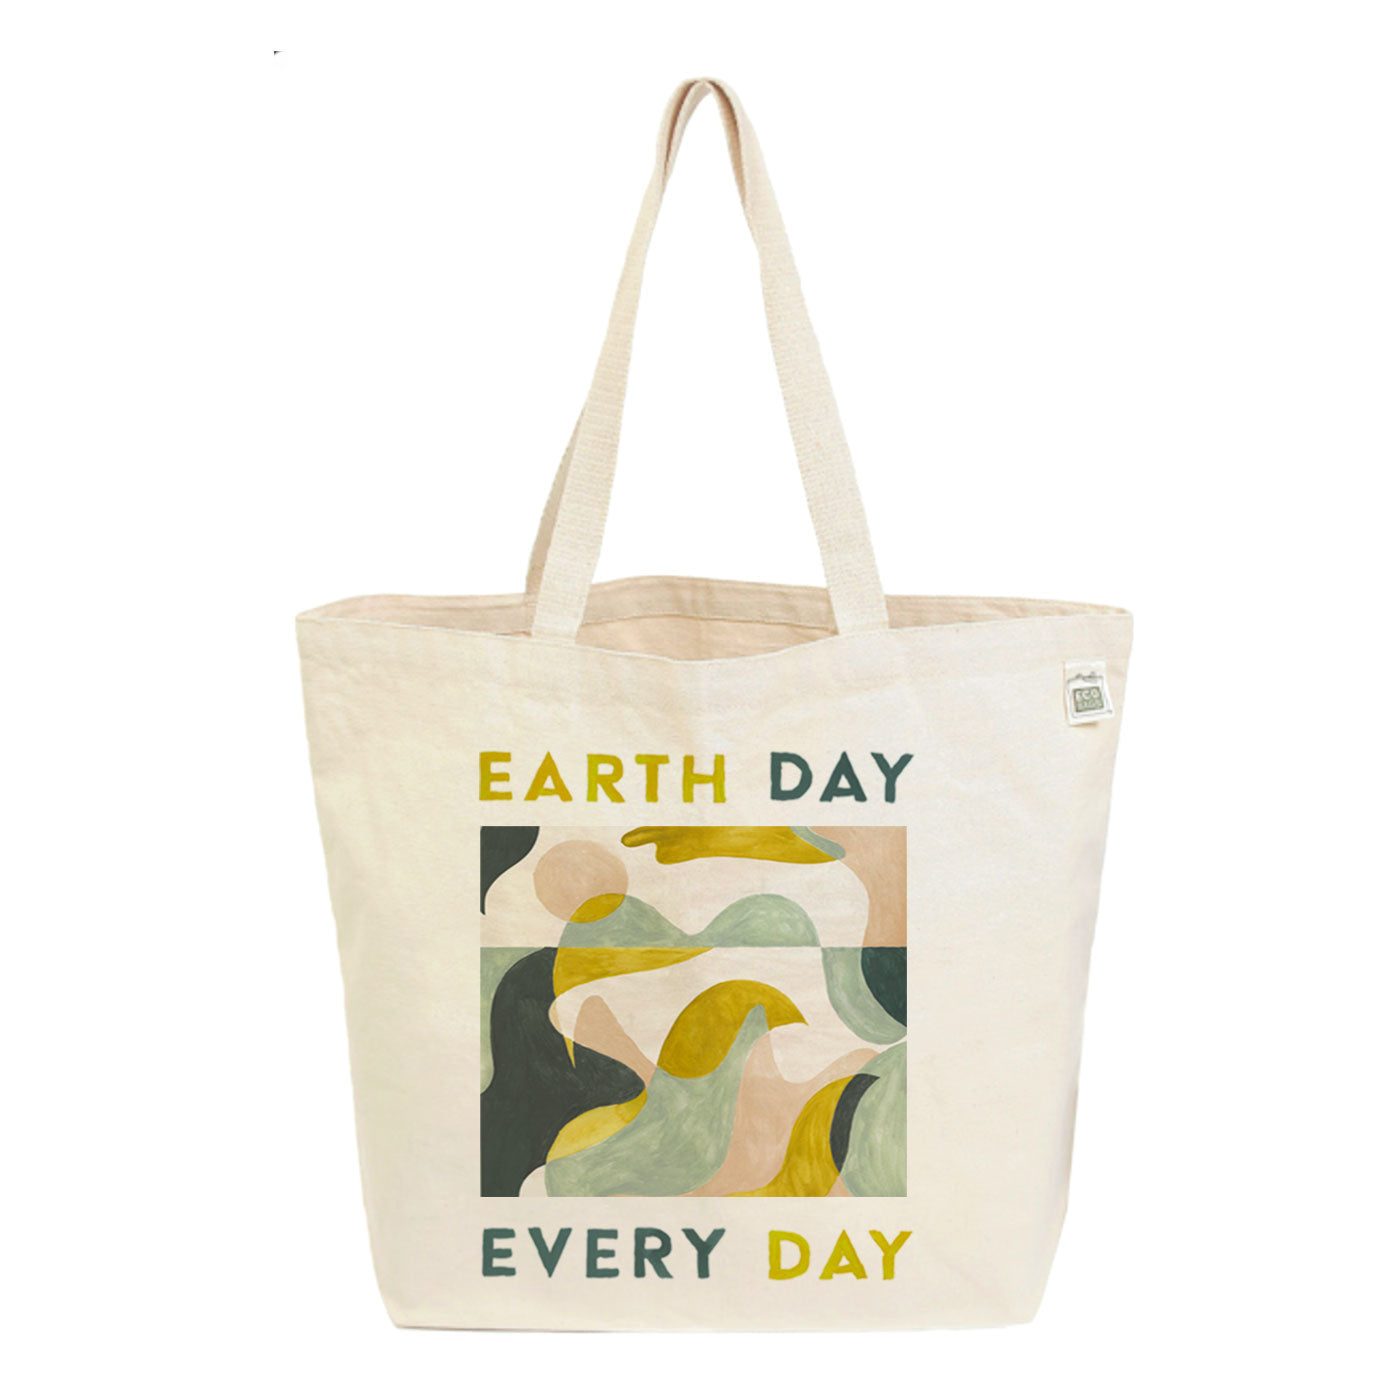 Custom Tote Bags: An Eco-Conscious Brand's Ultimate Marketing Tool |  Decentcustom